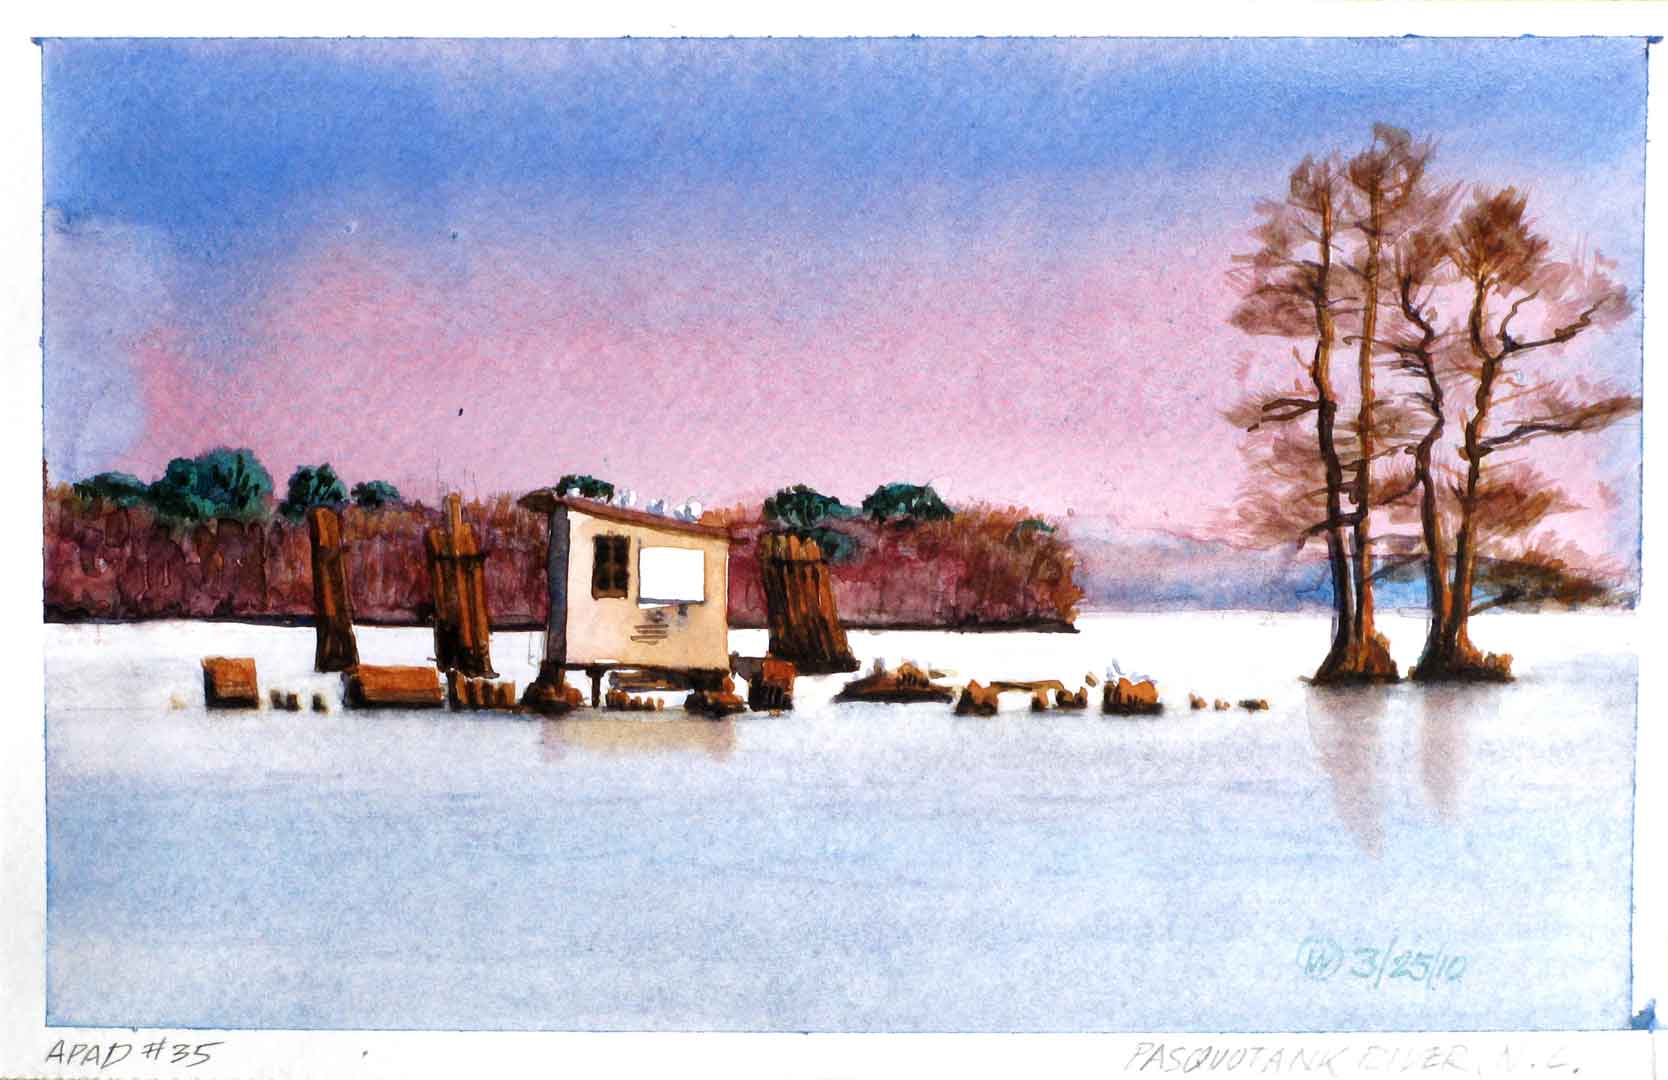 Pasquotank River, Watercolor on paper, 8 x 5